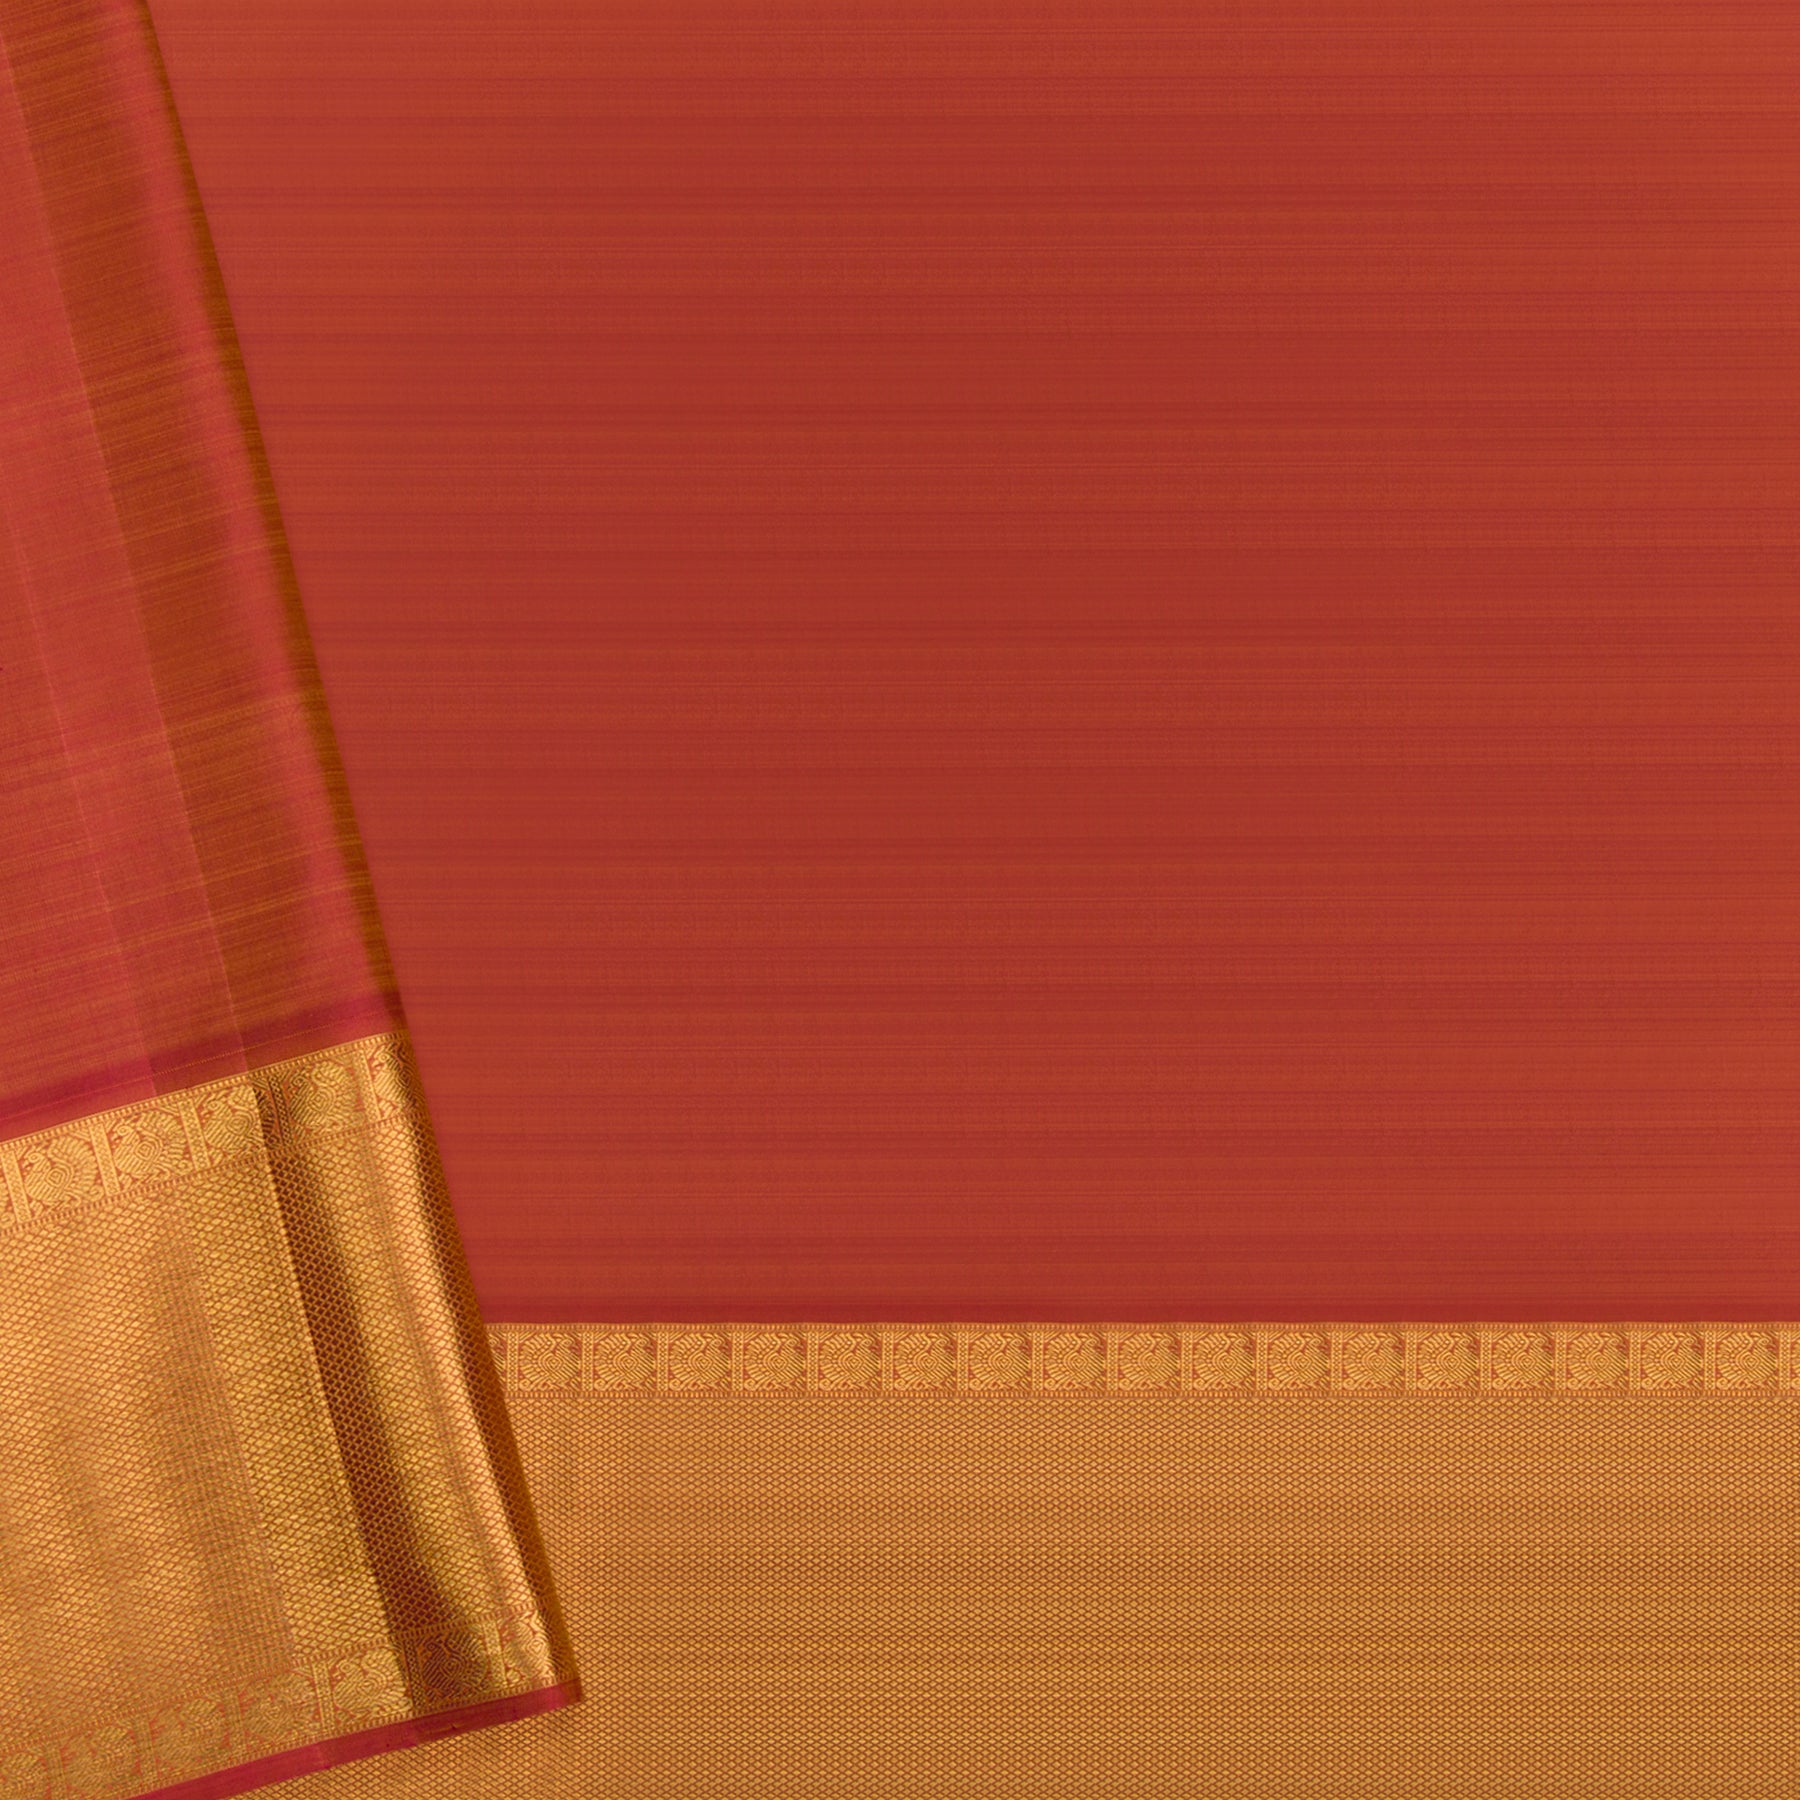 Kanakavalli Kanjivaram Silk Sari 22-110-HS001-13620 - Blouse View